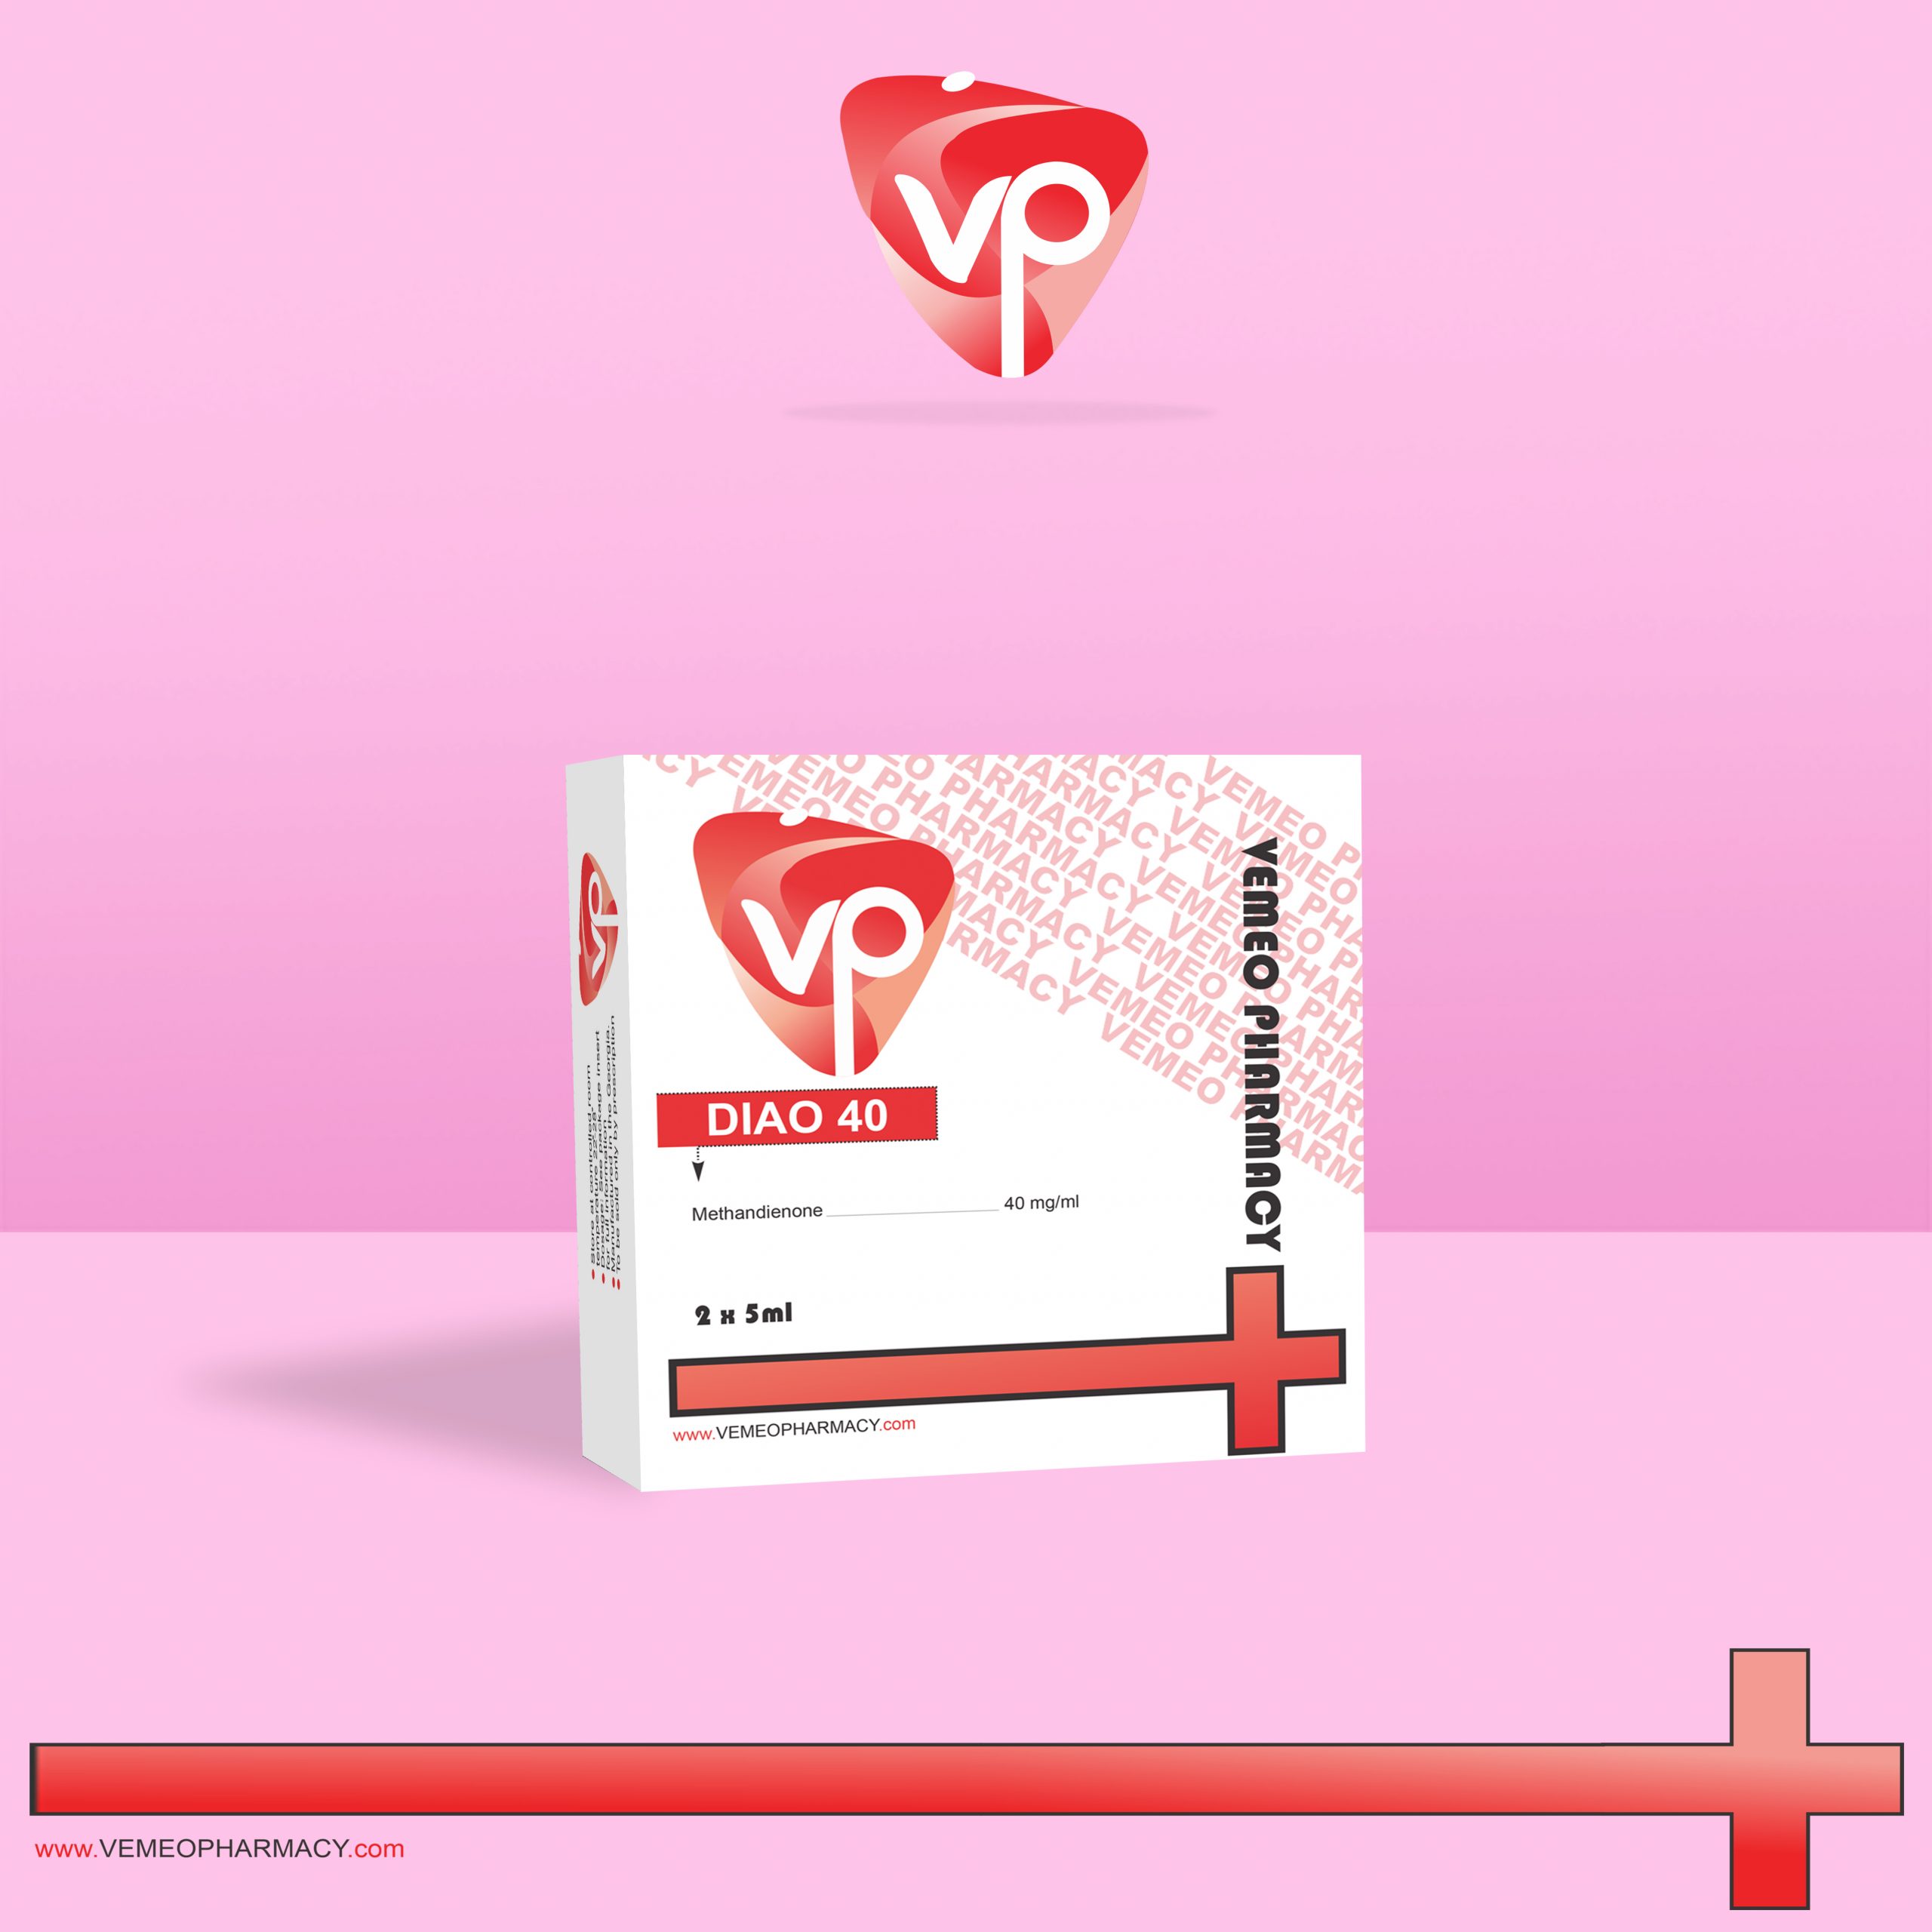 DIAO 40 – Vemeo Pharmacy